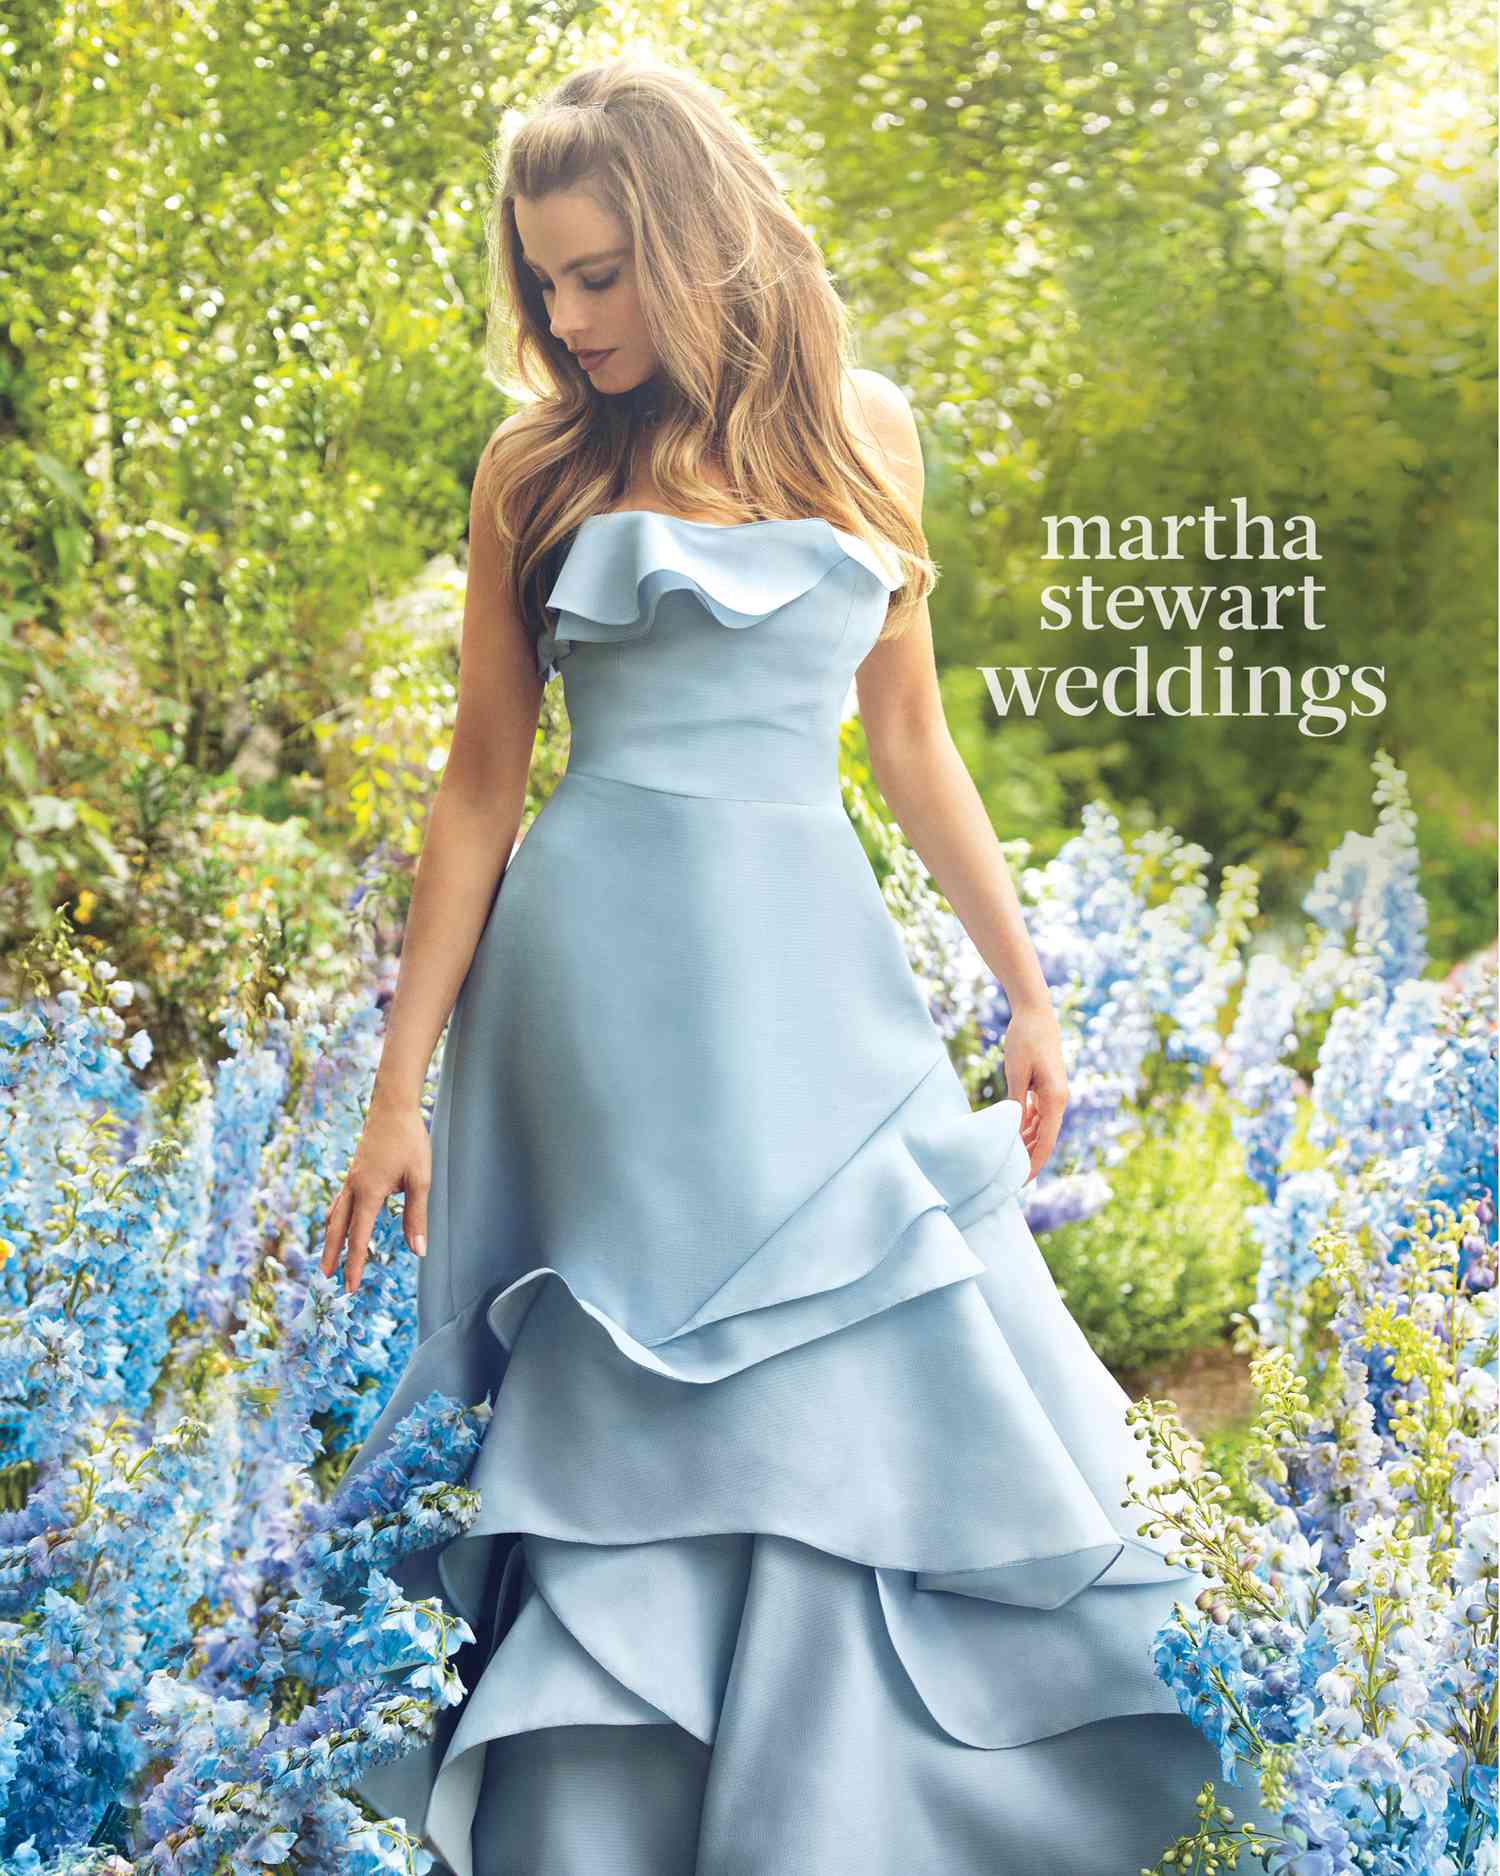 sofia-vergara-m04-blue-bridal-gown-018v2-d112252-vert-0815.jpg